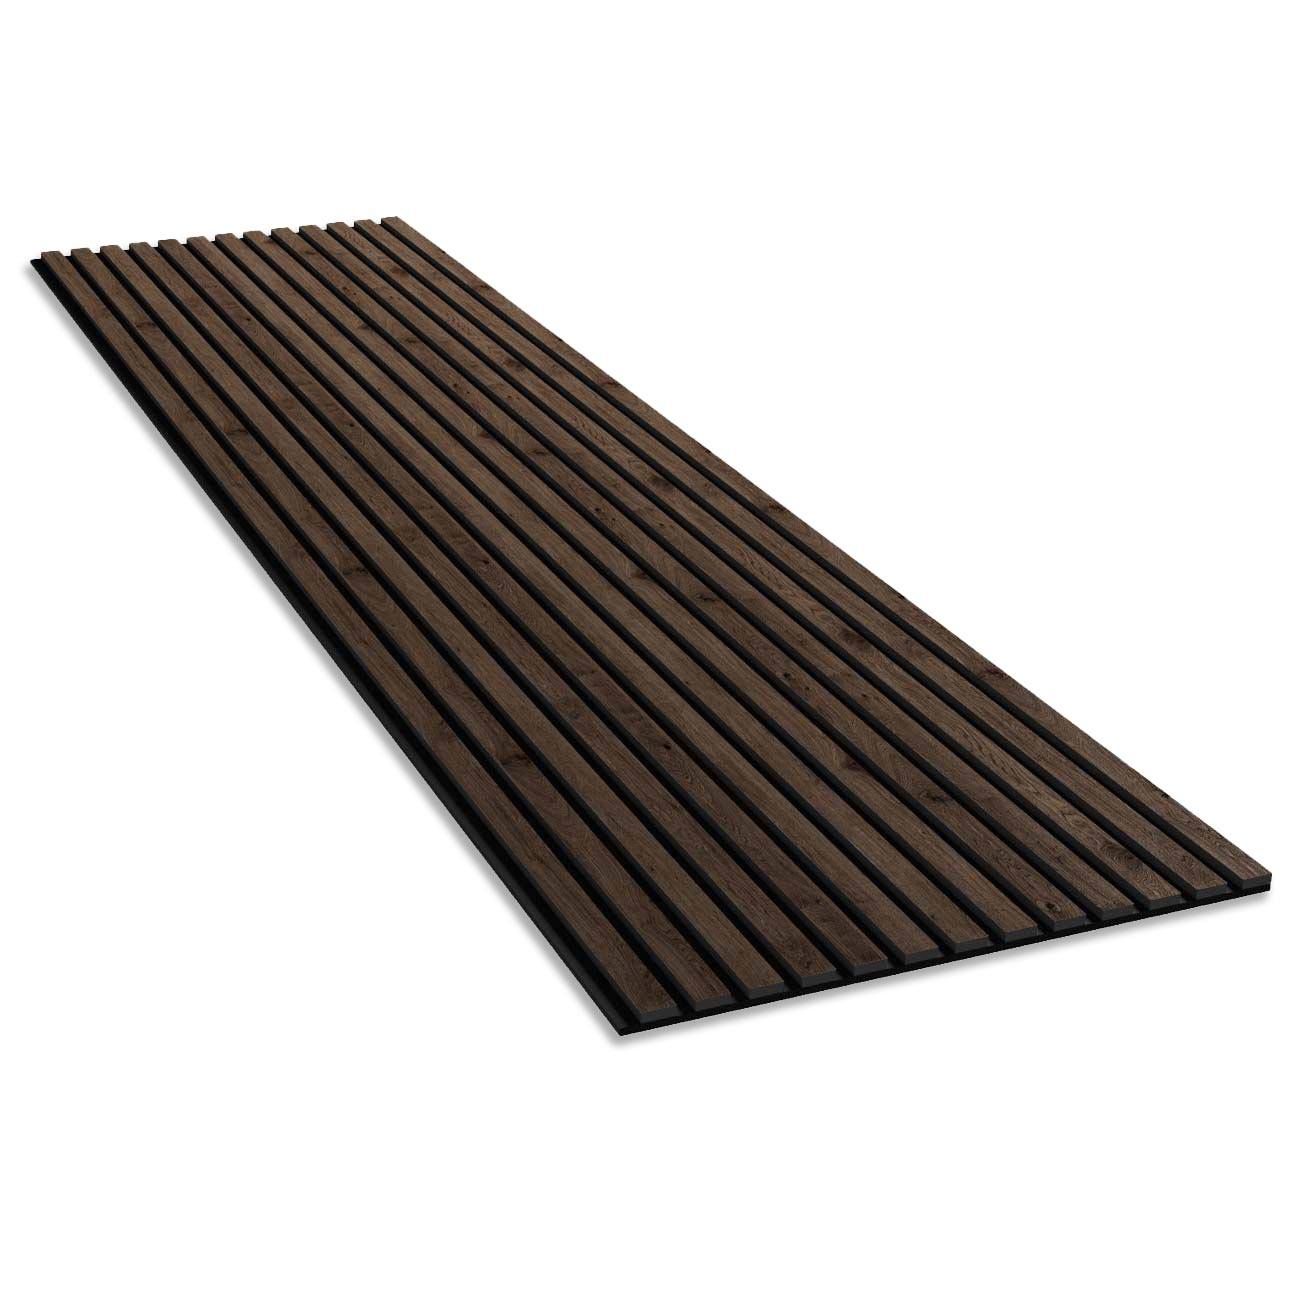 Smoked Oak Acoustic Slat Wood Panel 240 x 60 - Slats acoustic 3D Panels | DecorMania